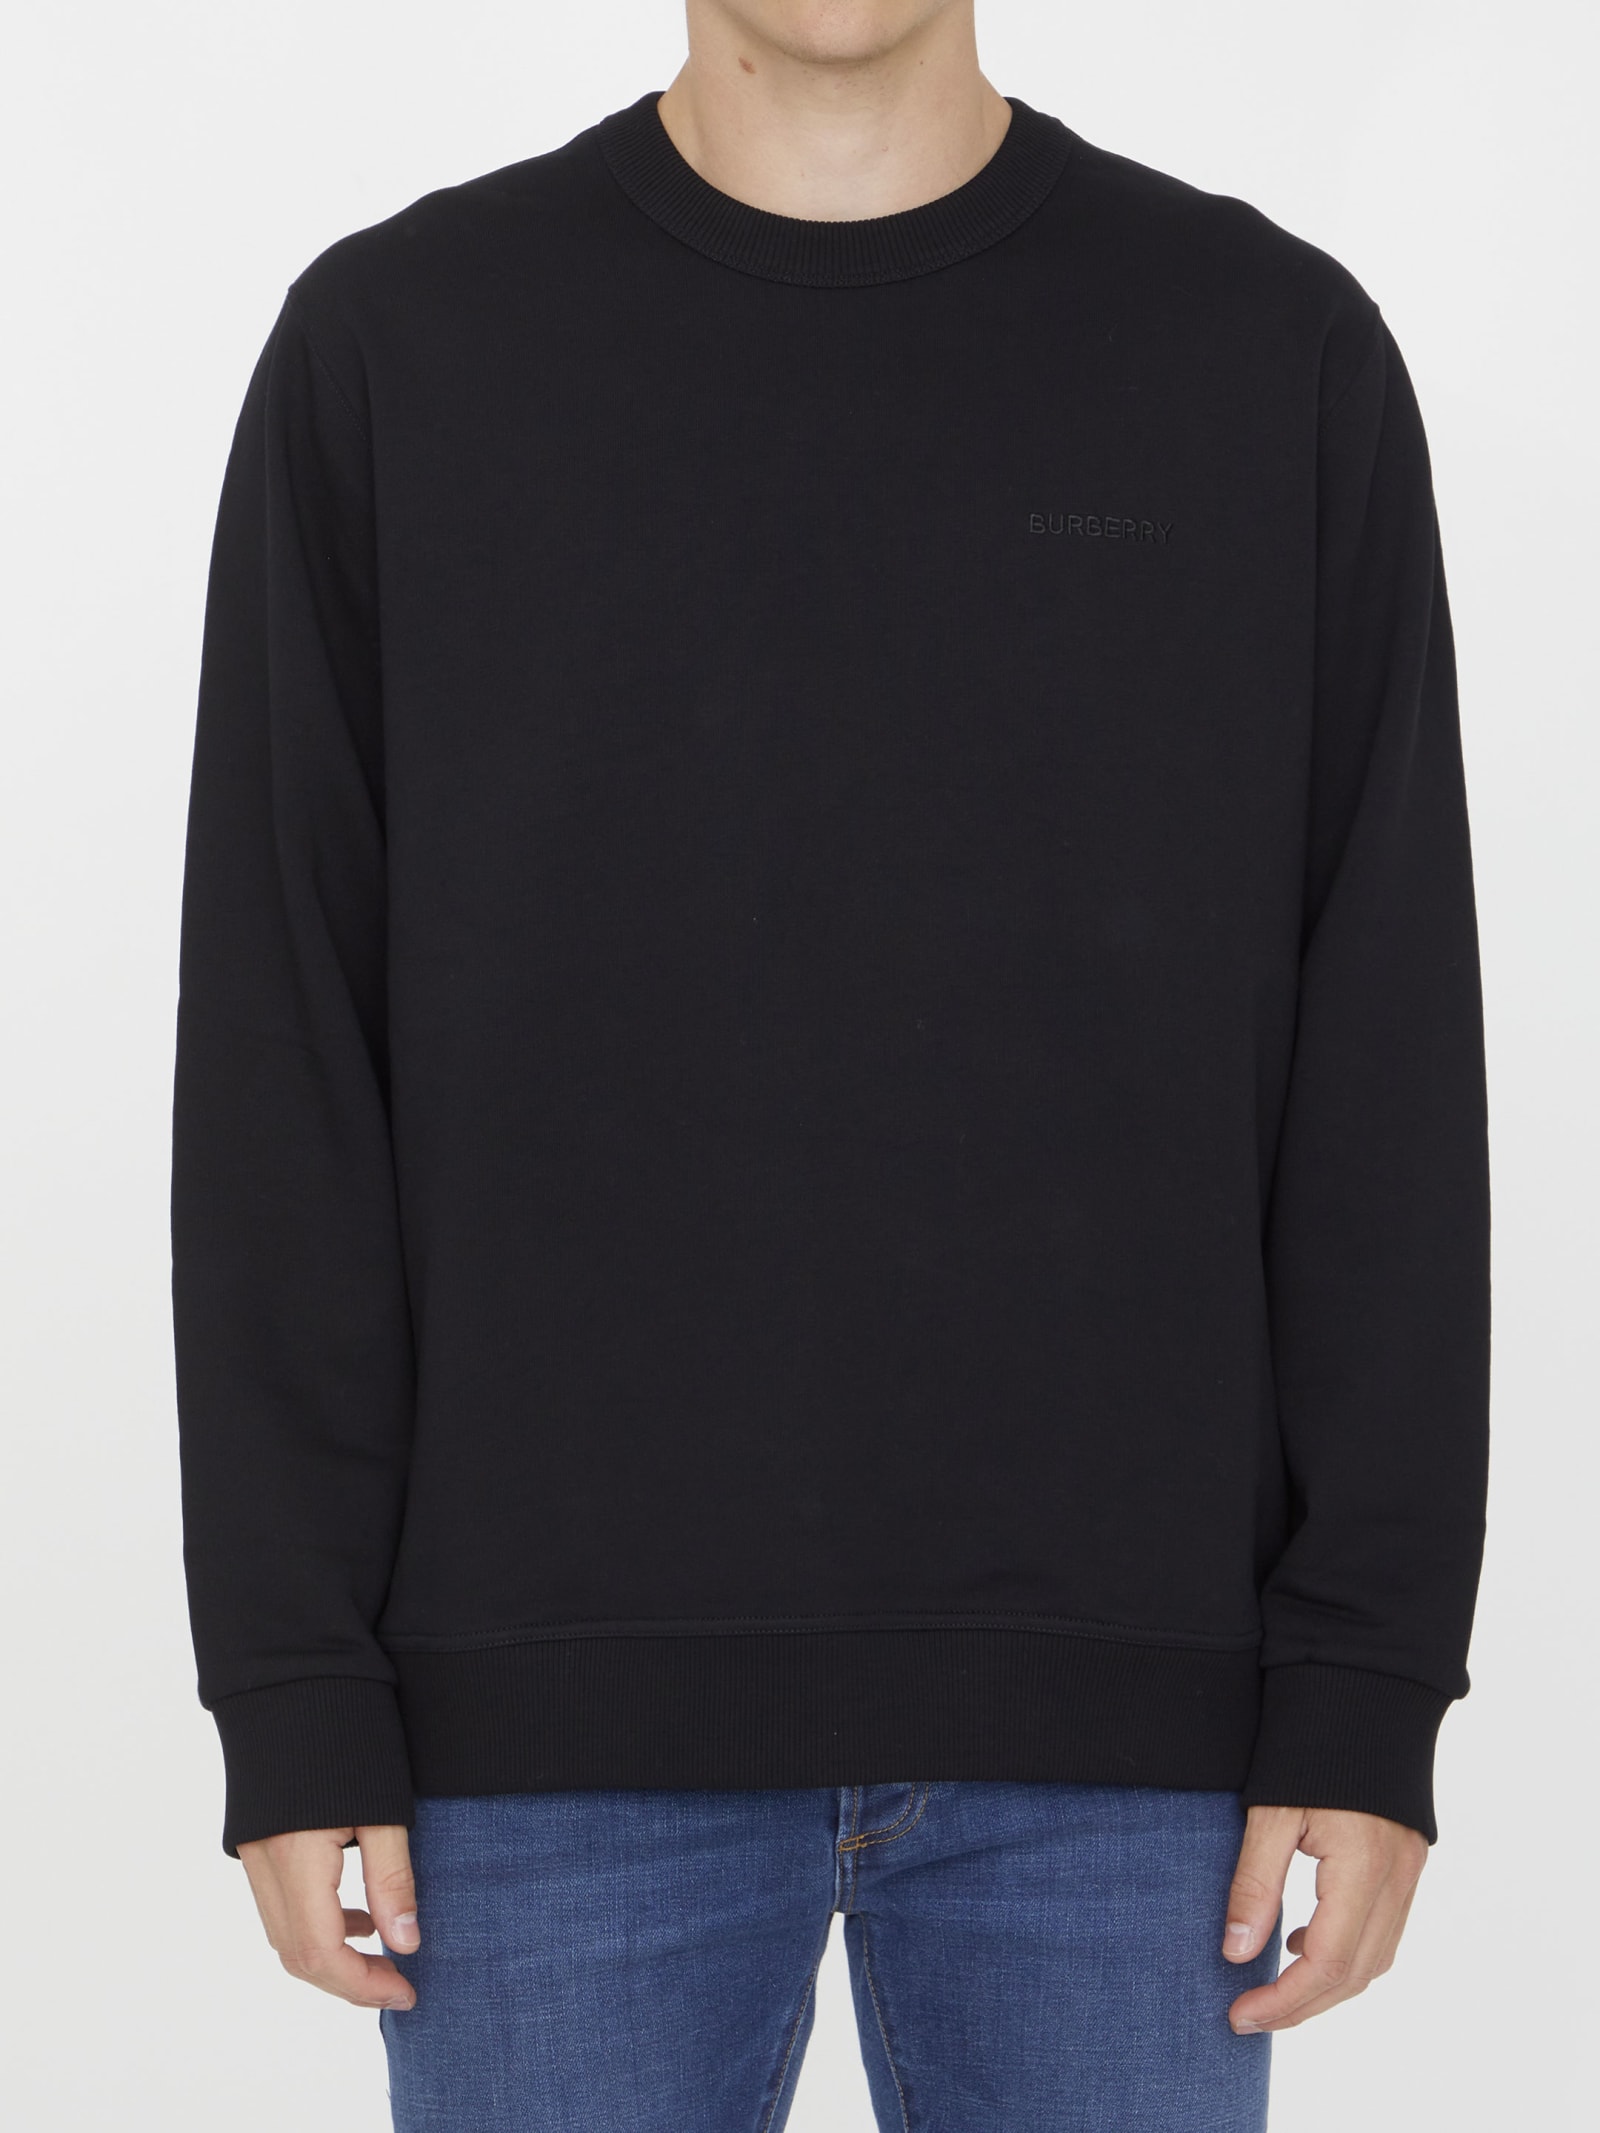 Burberry Ekd Check Sweatshirt In Black